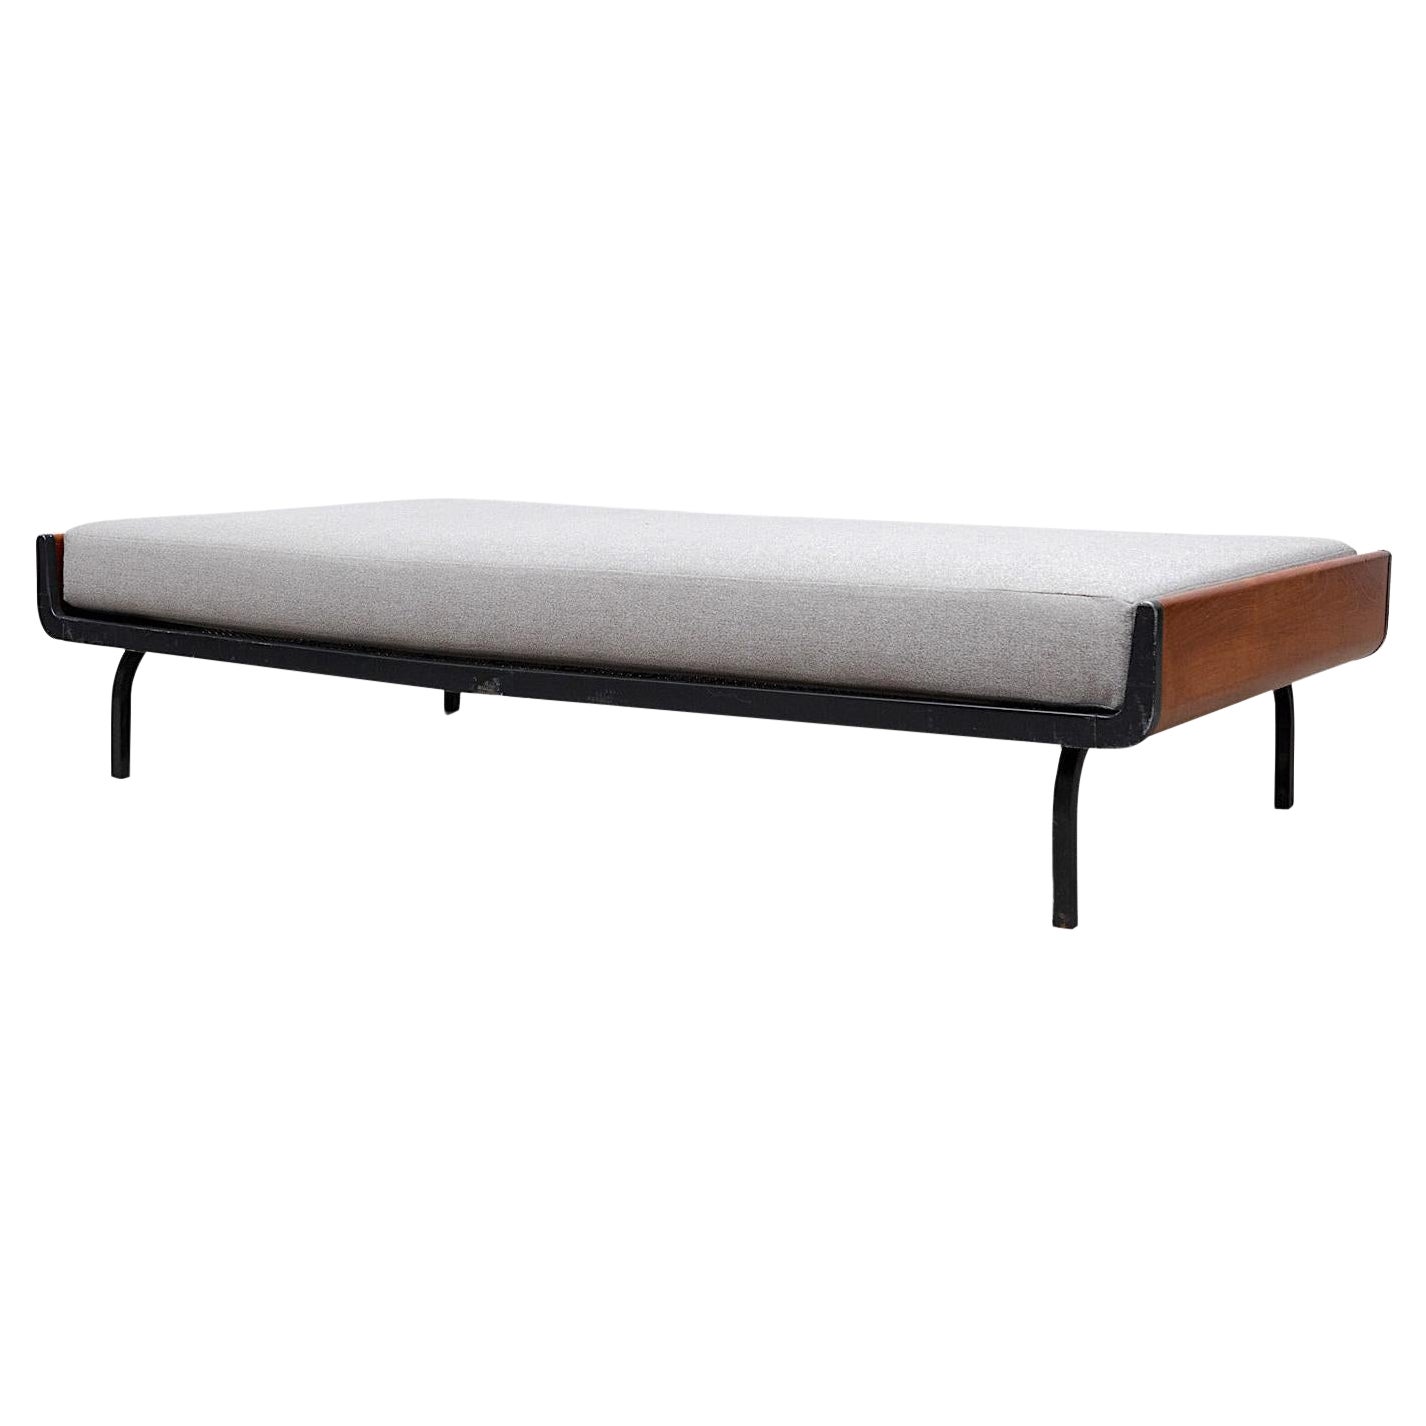 Friso Kramer-Stil Auping Day Bett mit grauer mattierter Zinnmatte